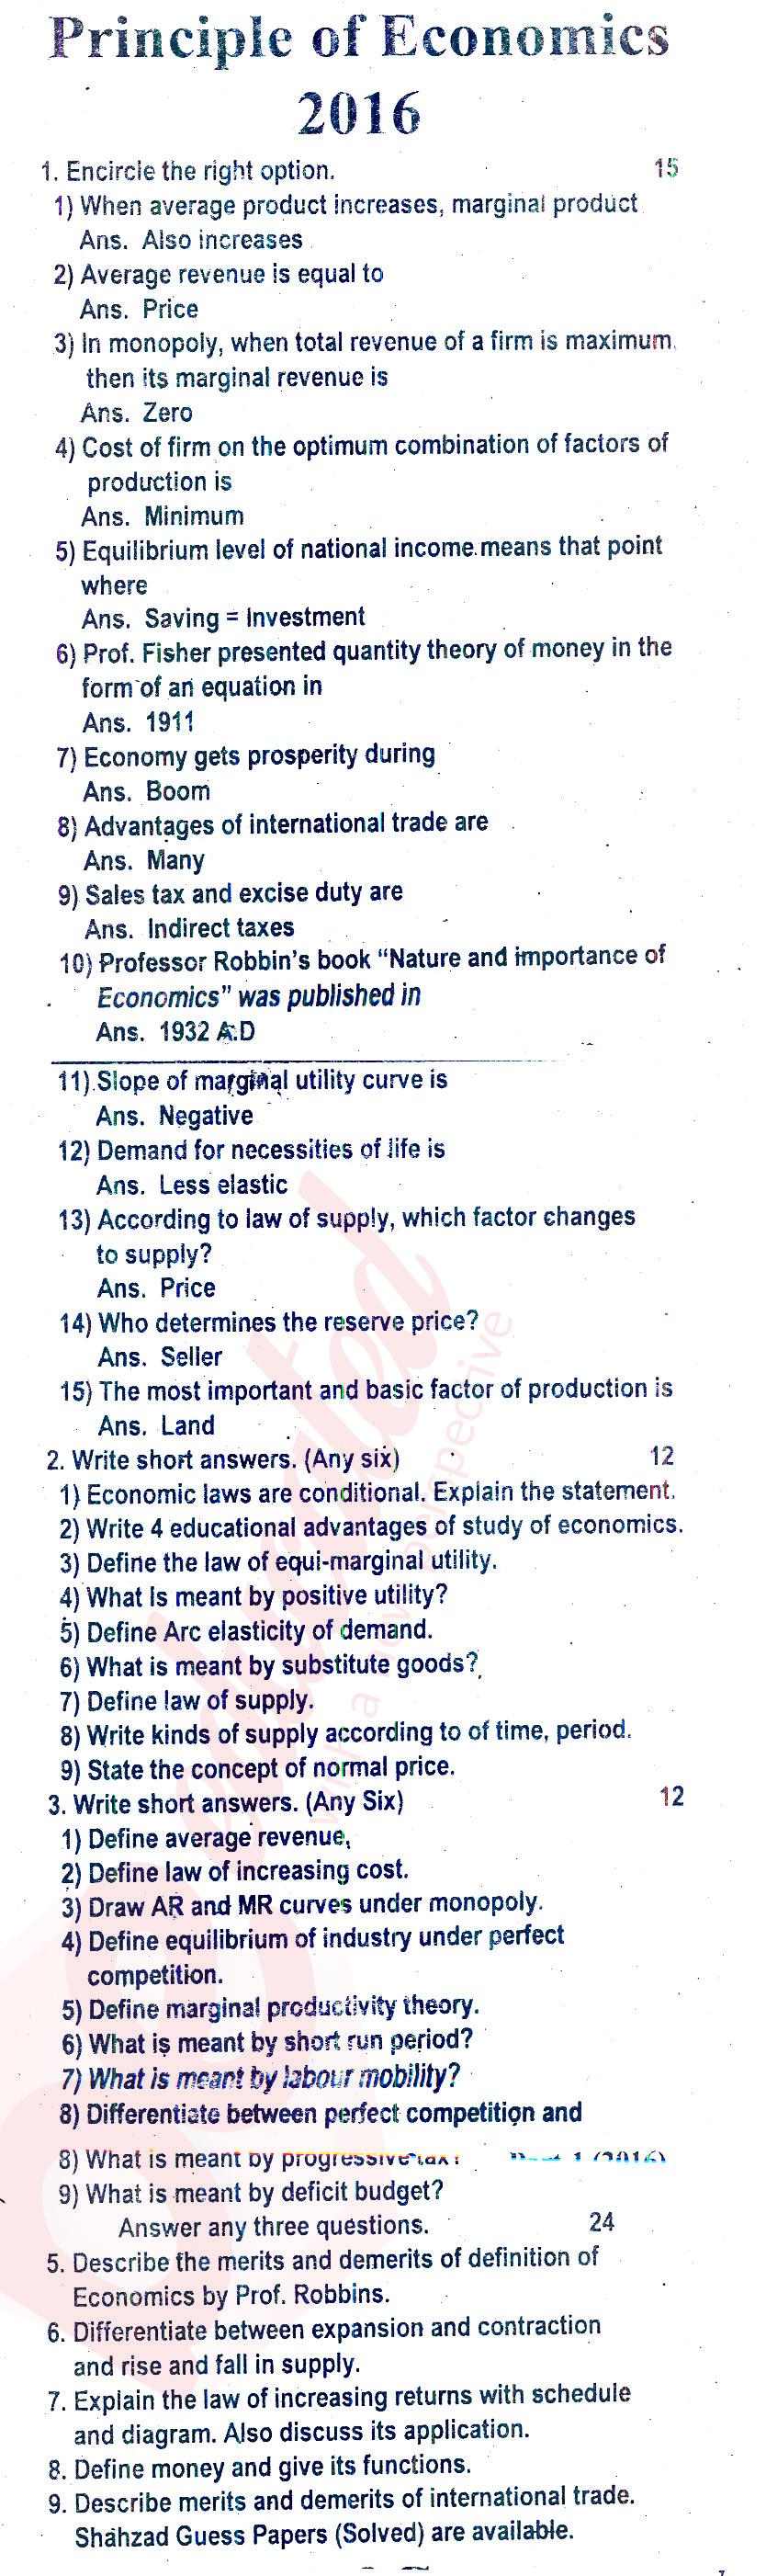 Principles of Economics ICOM Part 1 Past Paper Group 1 BISE Rawalpindi 2016